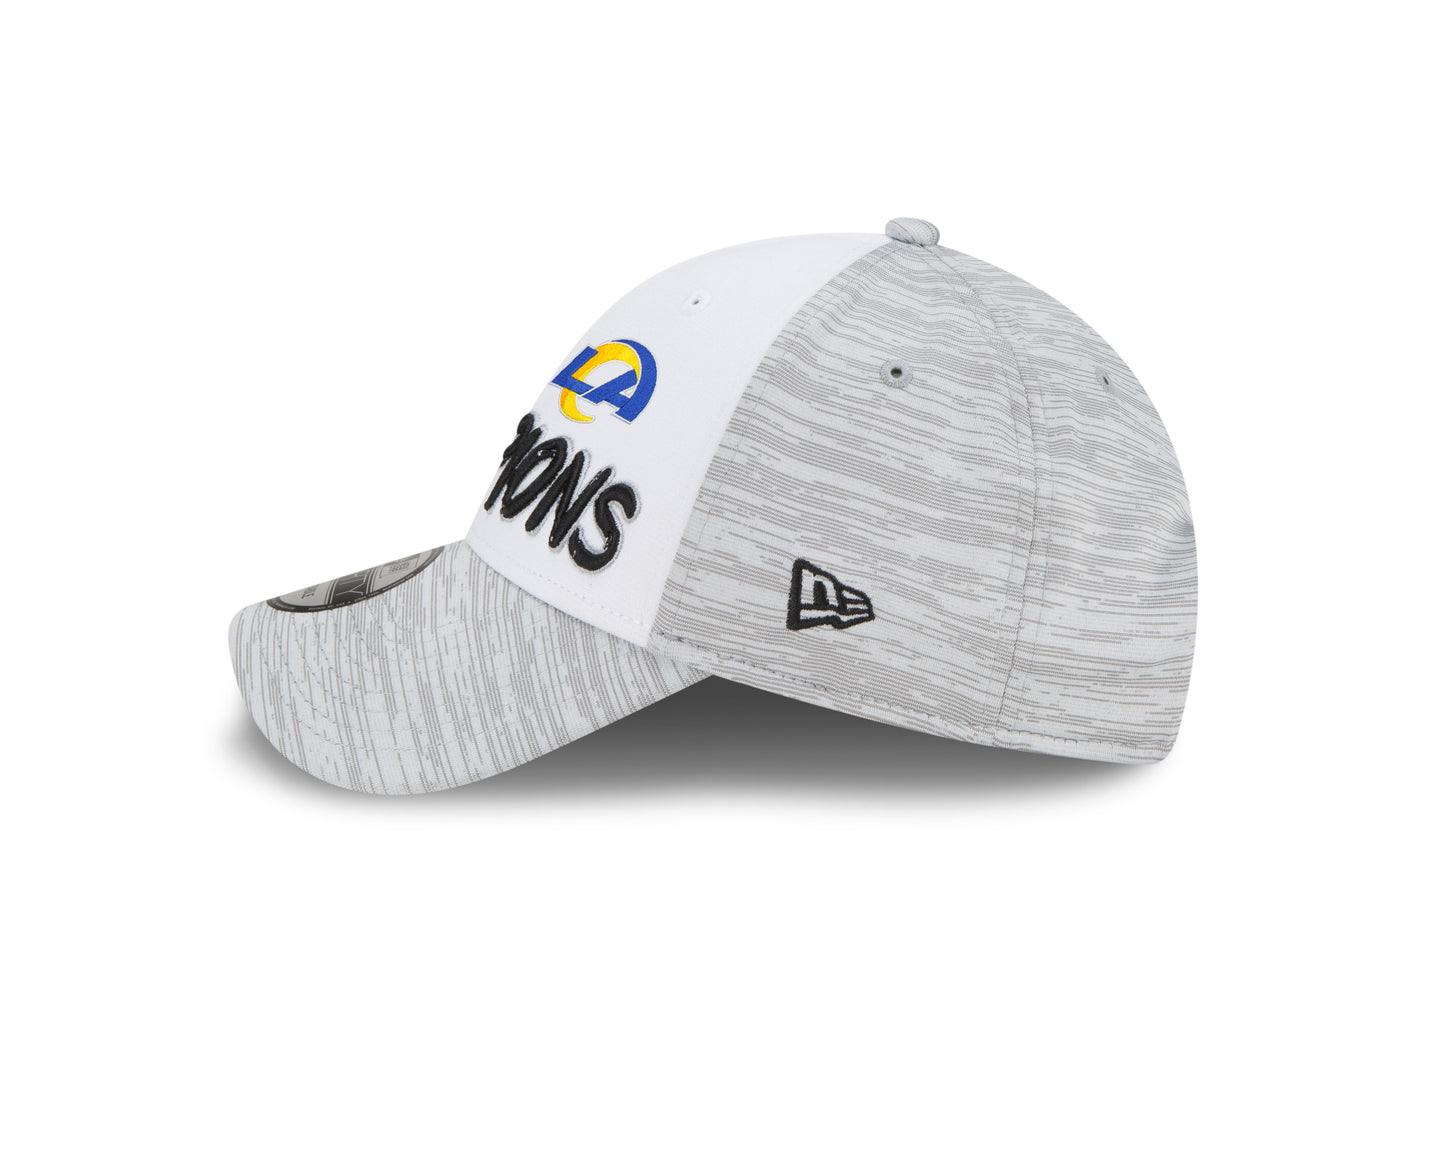 Los Angeles Rams New Era 2021 NFC Champions Locker Room 9FORTY Snapback Adjustable Hat - White/Heathered Gray